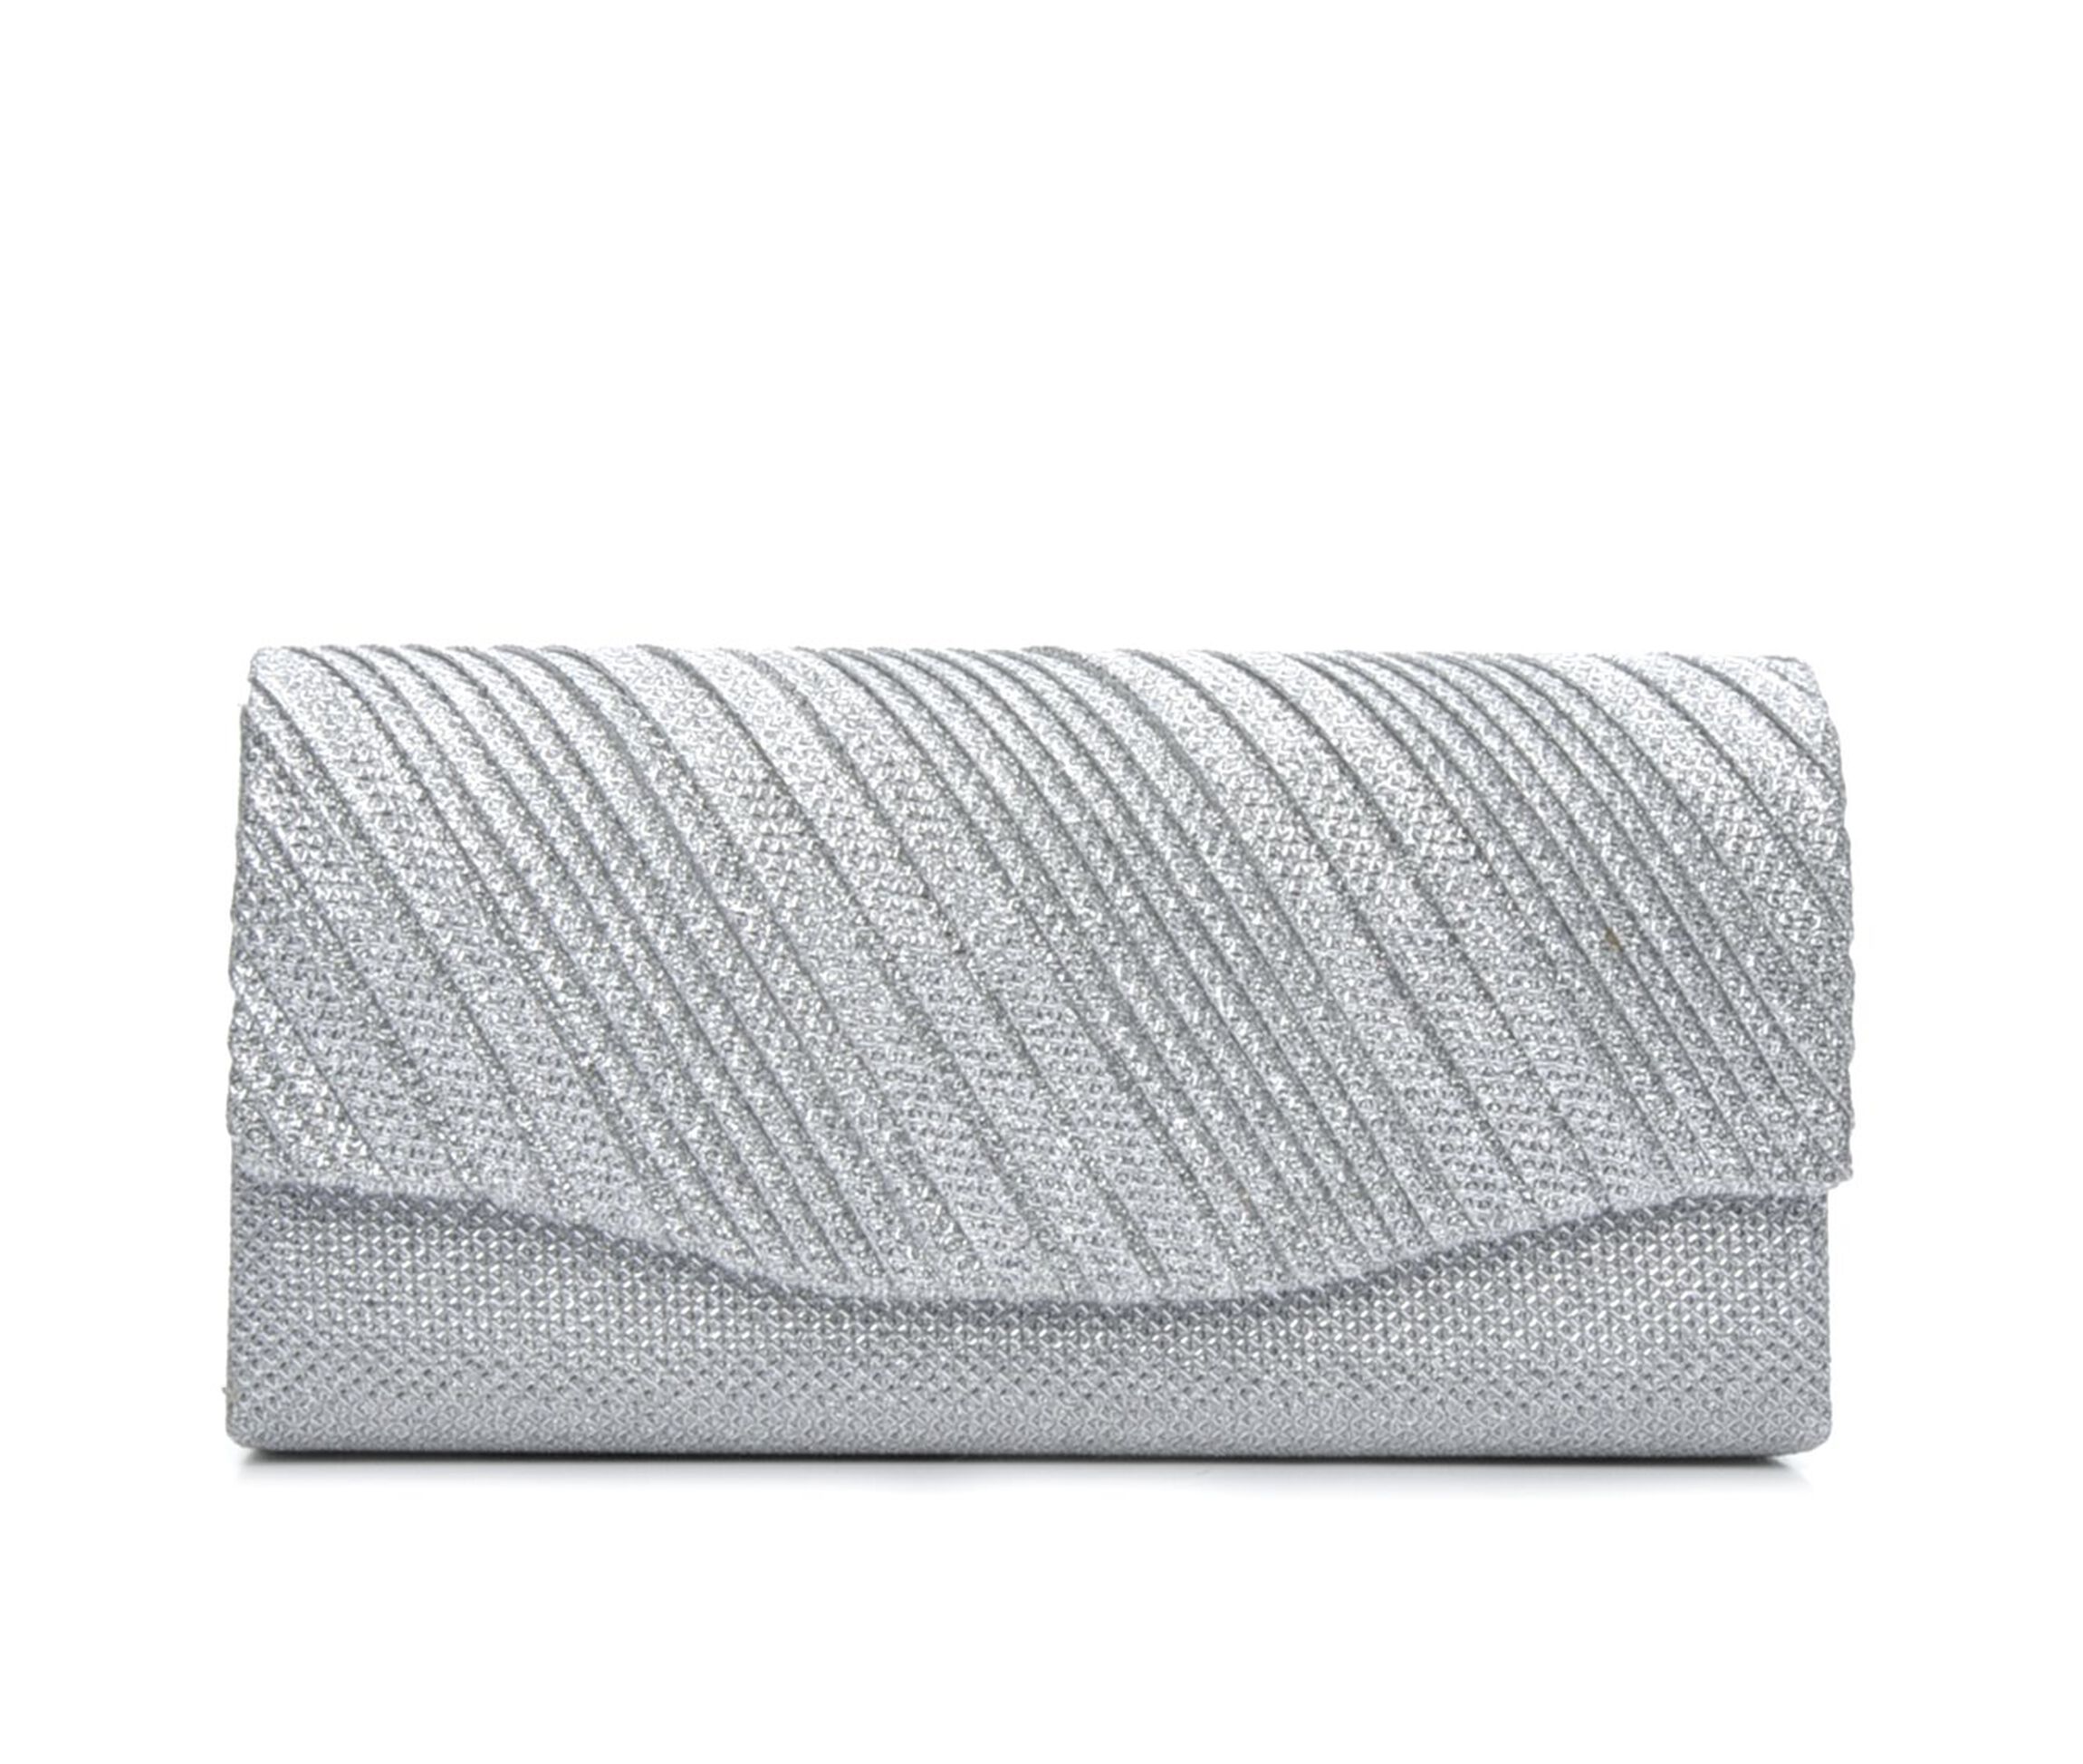 Four Seasons Handbags Small Diagonal Stripe Evening Clutch (Silver)